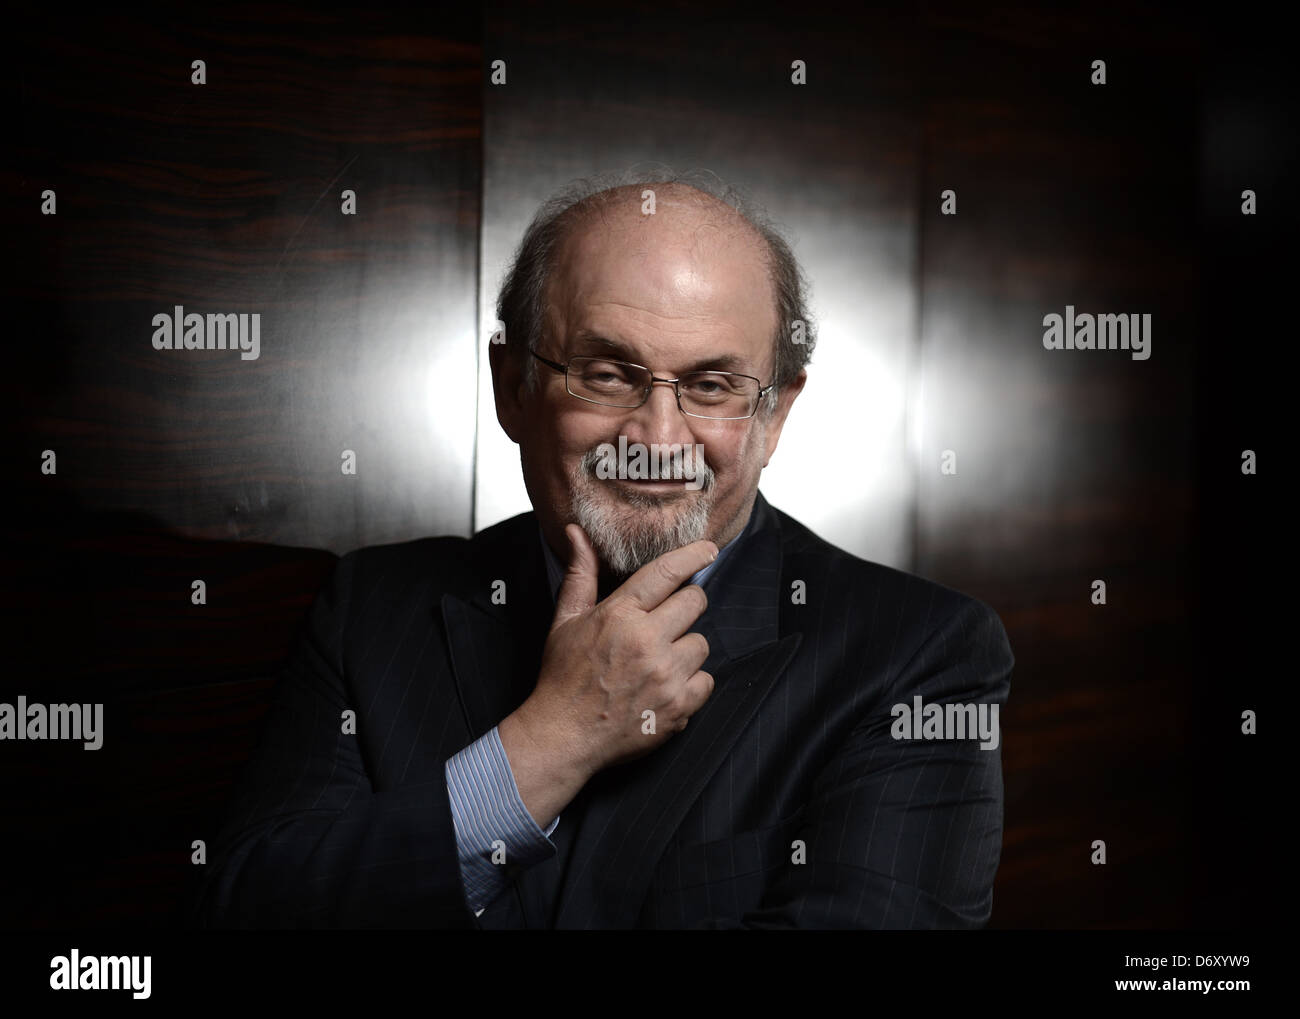 Berlin, Germany, writer Salman Rushdie, in portrait Stock Photo